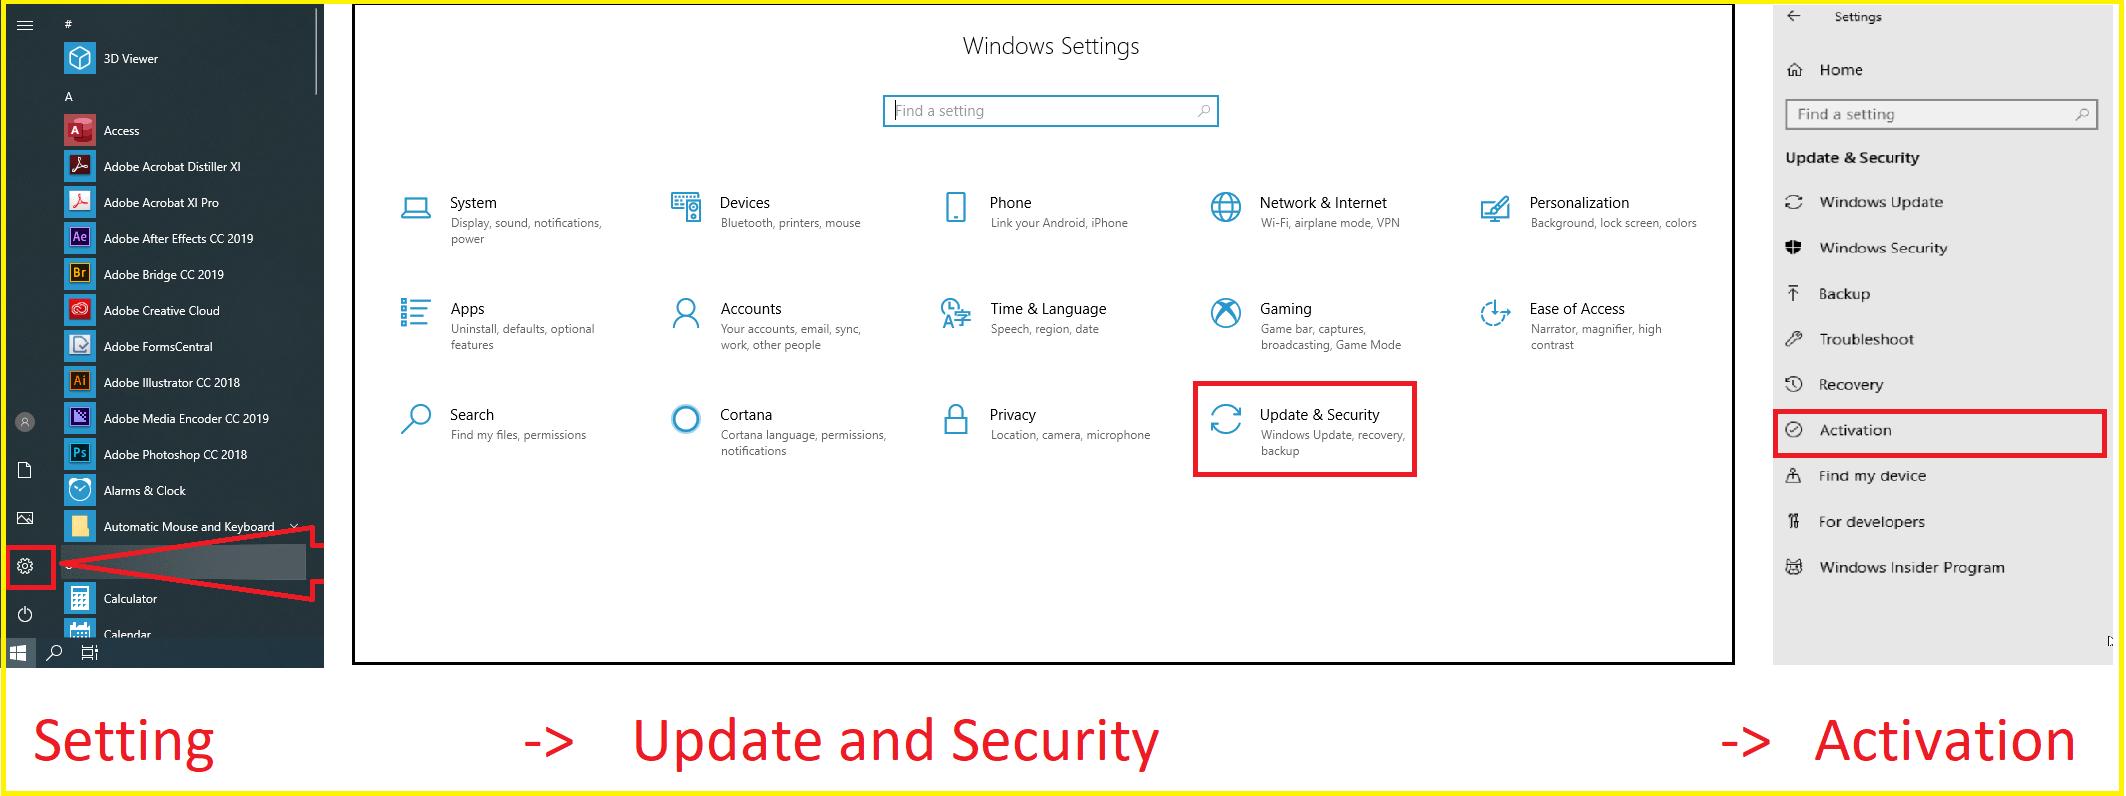 Mua Key Windows 10 Pro - Chuẩn Hãng4.4 (54)